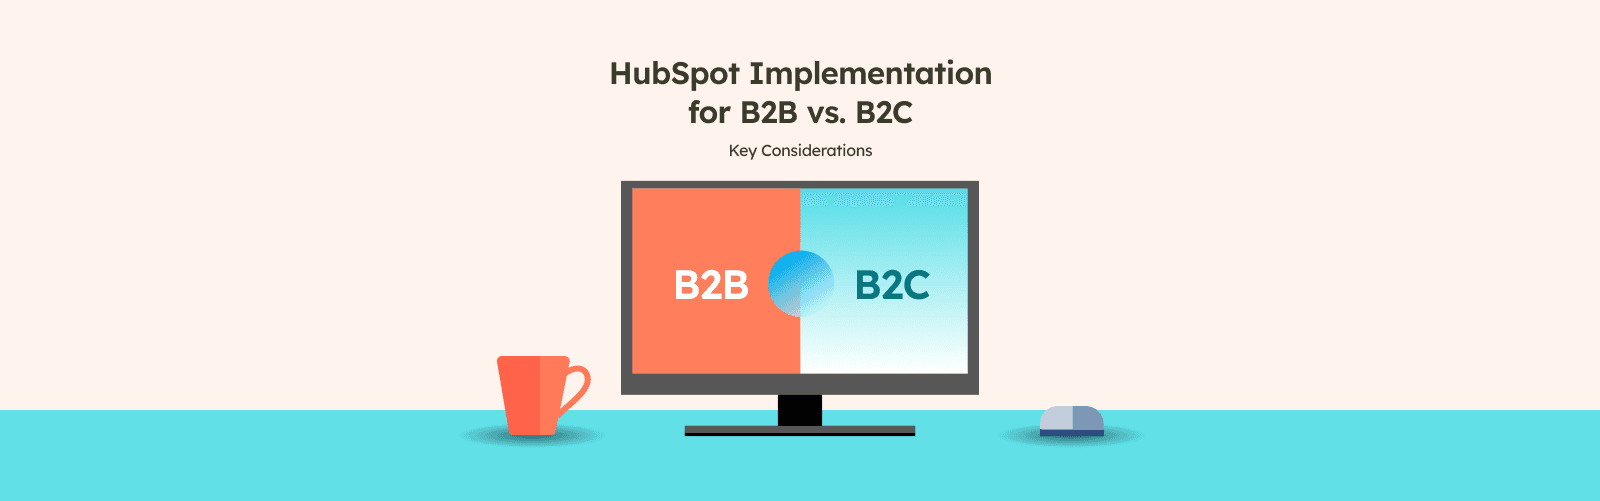 Hubspot Implementation for b2bvsb2c